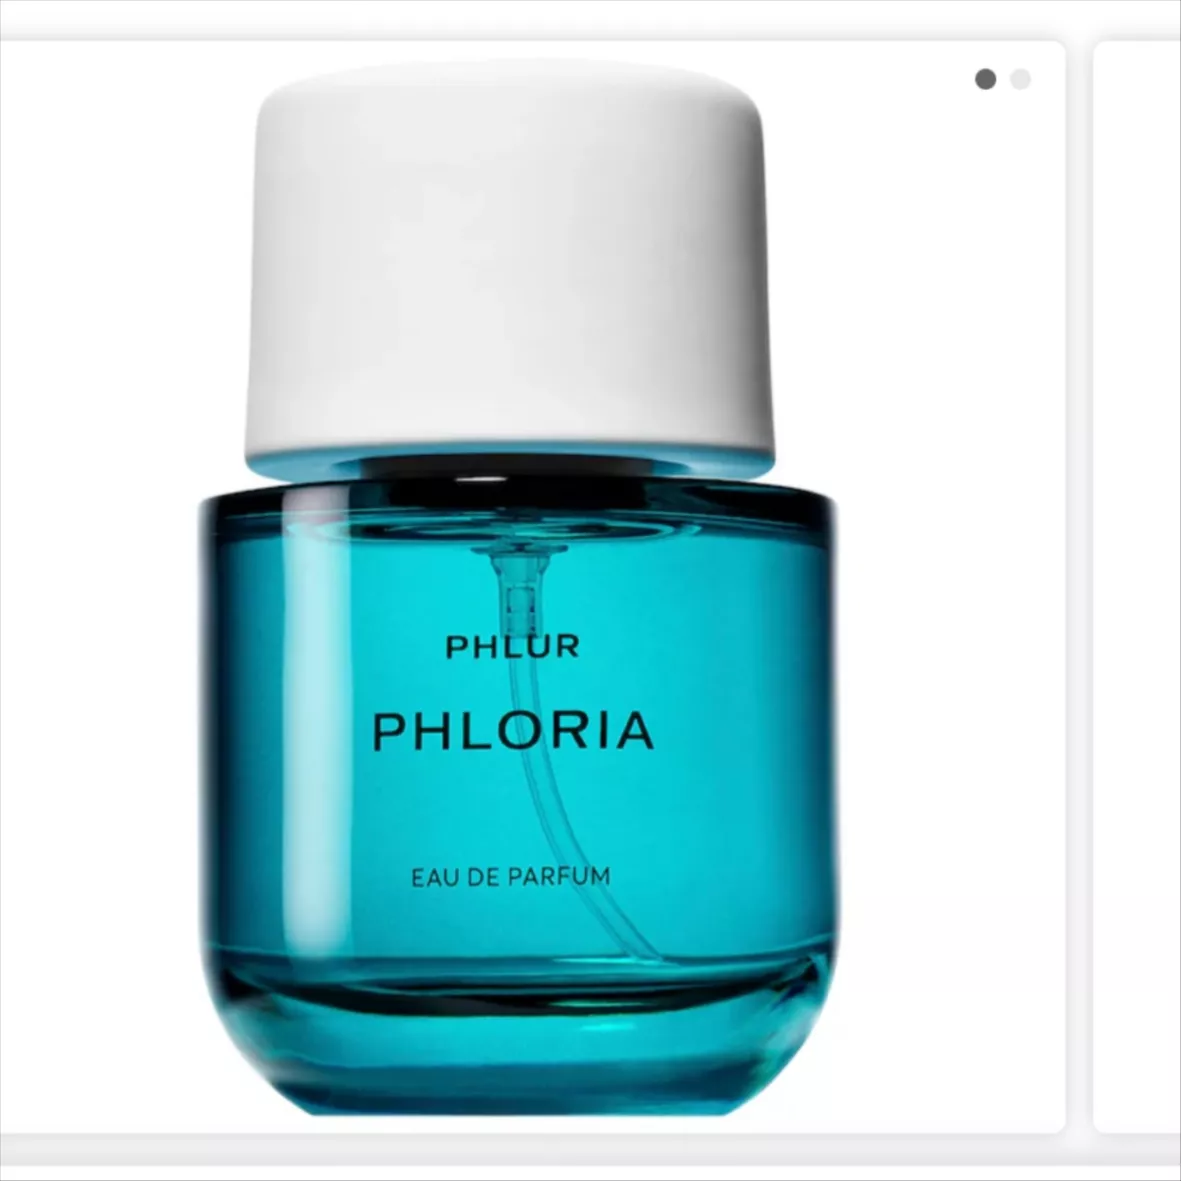 Phloria Eau de Parfum Travel Spray curated on LTK